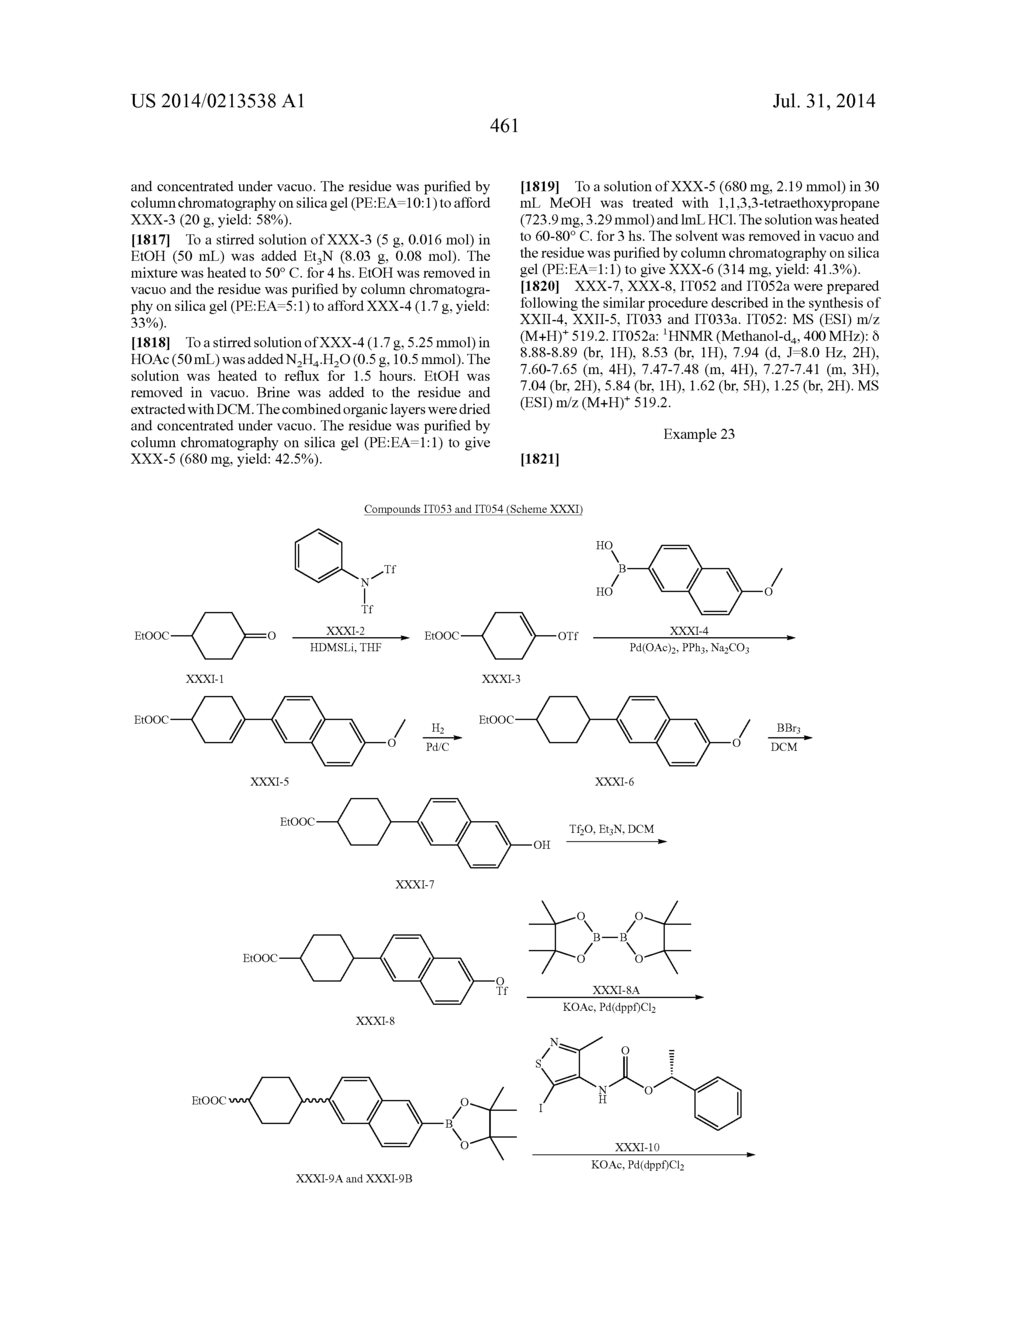 LYSOPHOSPHATIDIC ACID RECEPTOR ANTAGONISTS - diagram, schematic, and image 462